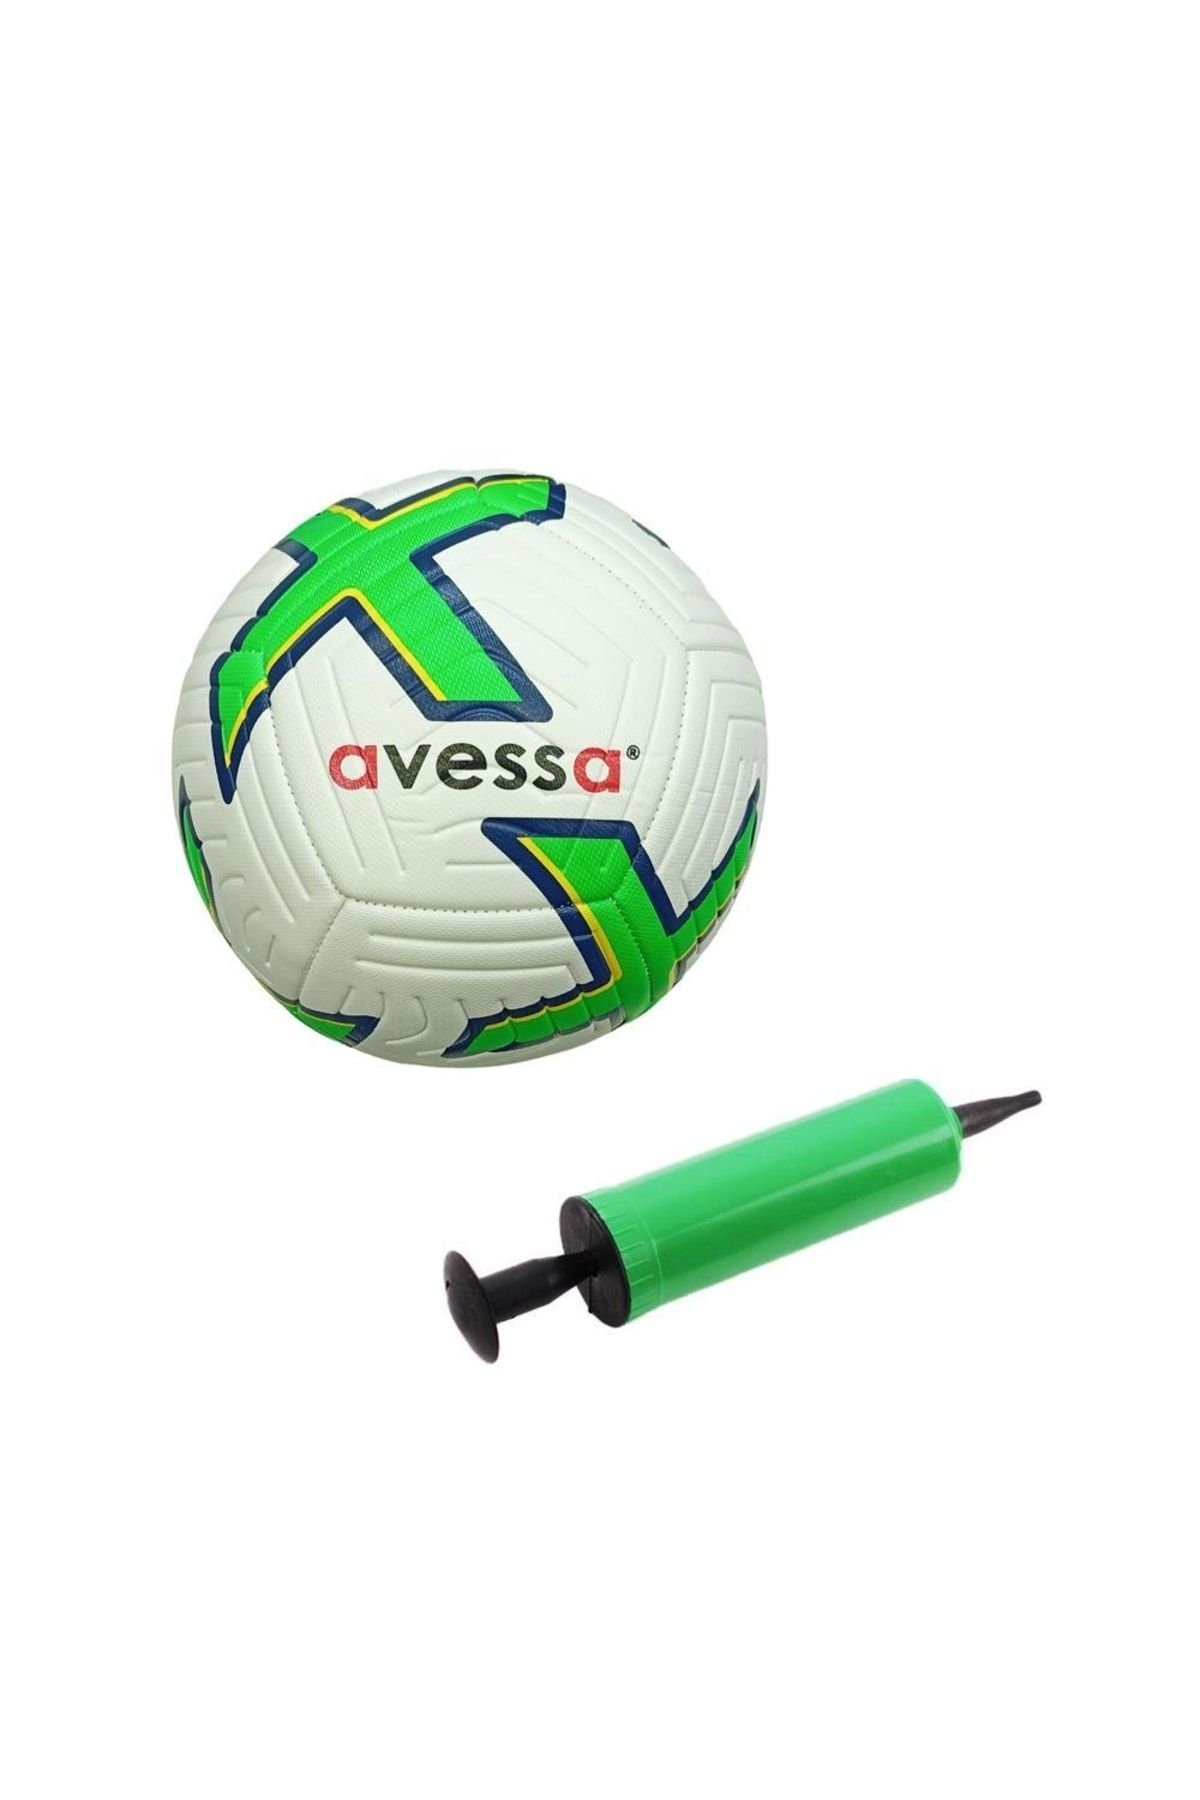 Avessa Futbol Topu Karışık Renkli Pompalı Ft-500